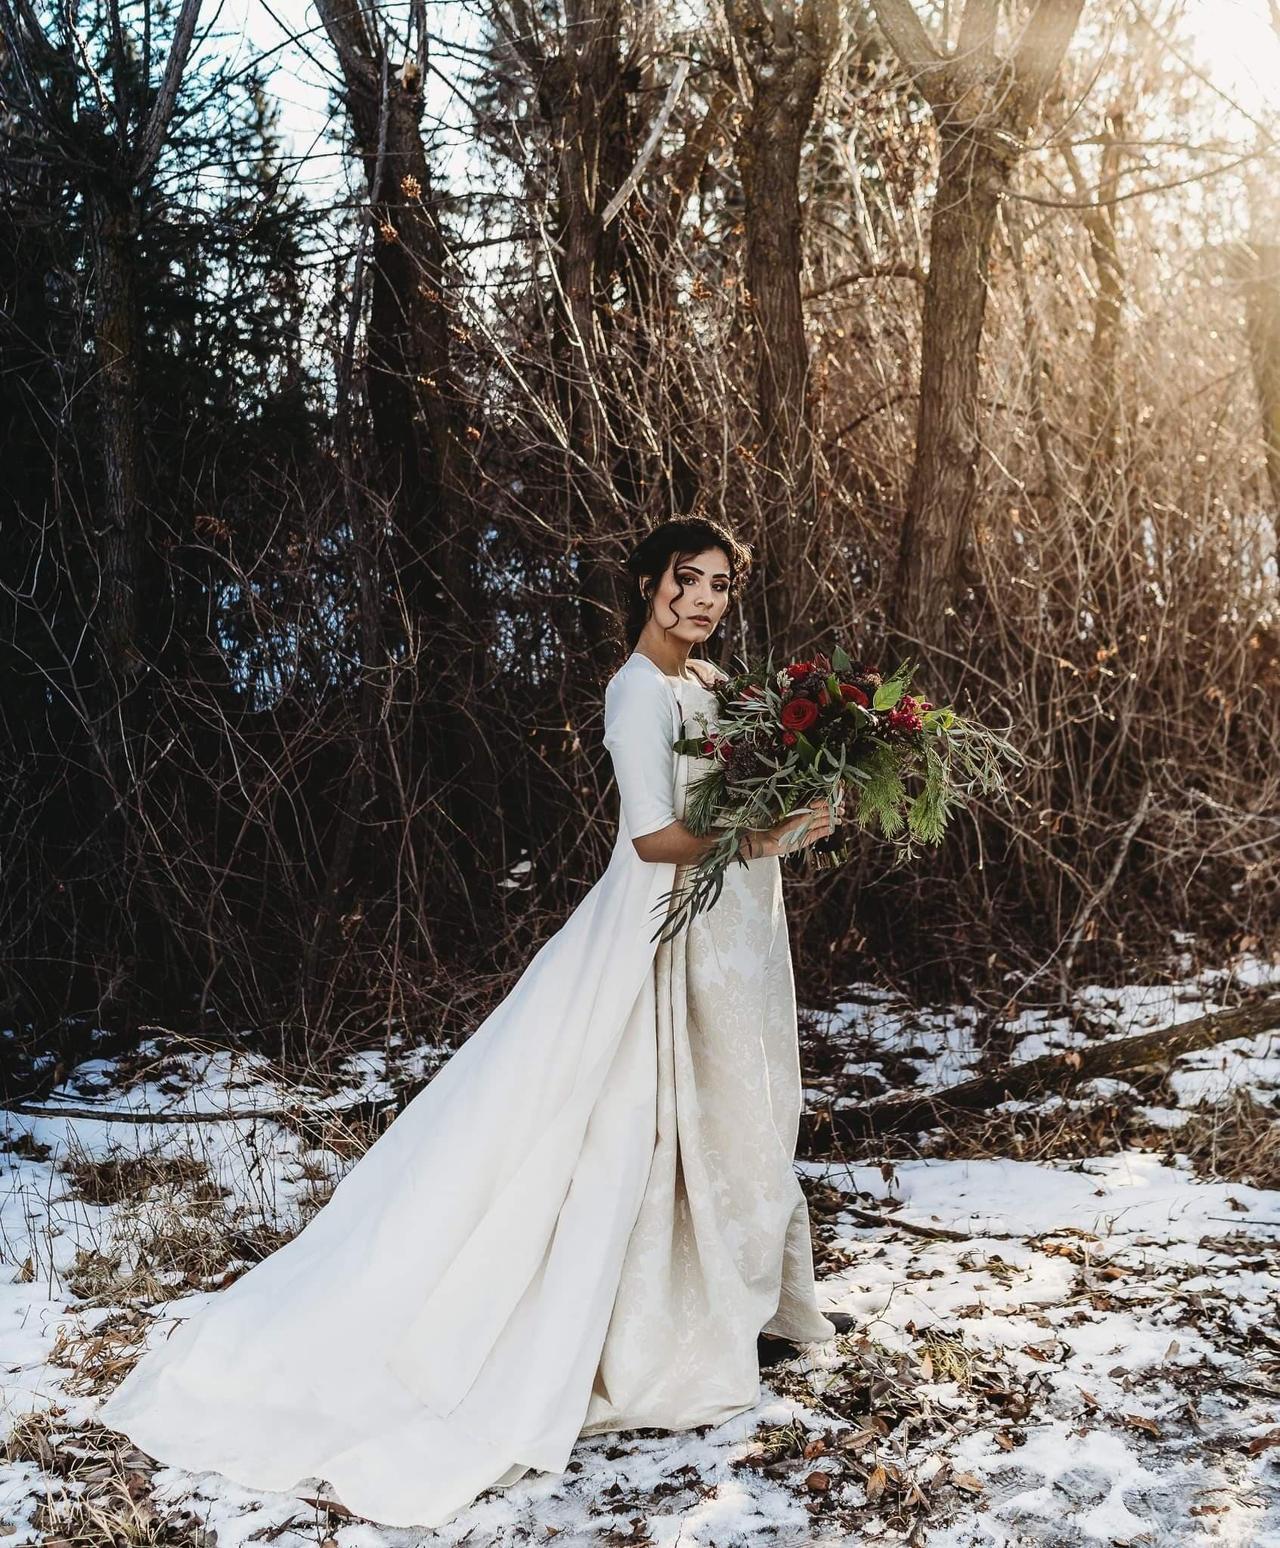 5 Tips for Choosing a Winter Wedding Dress